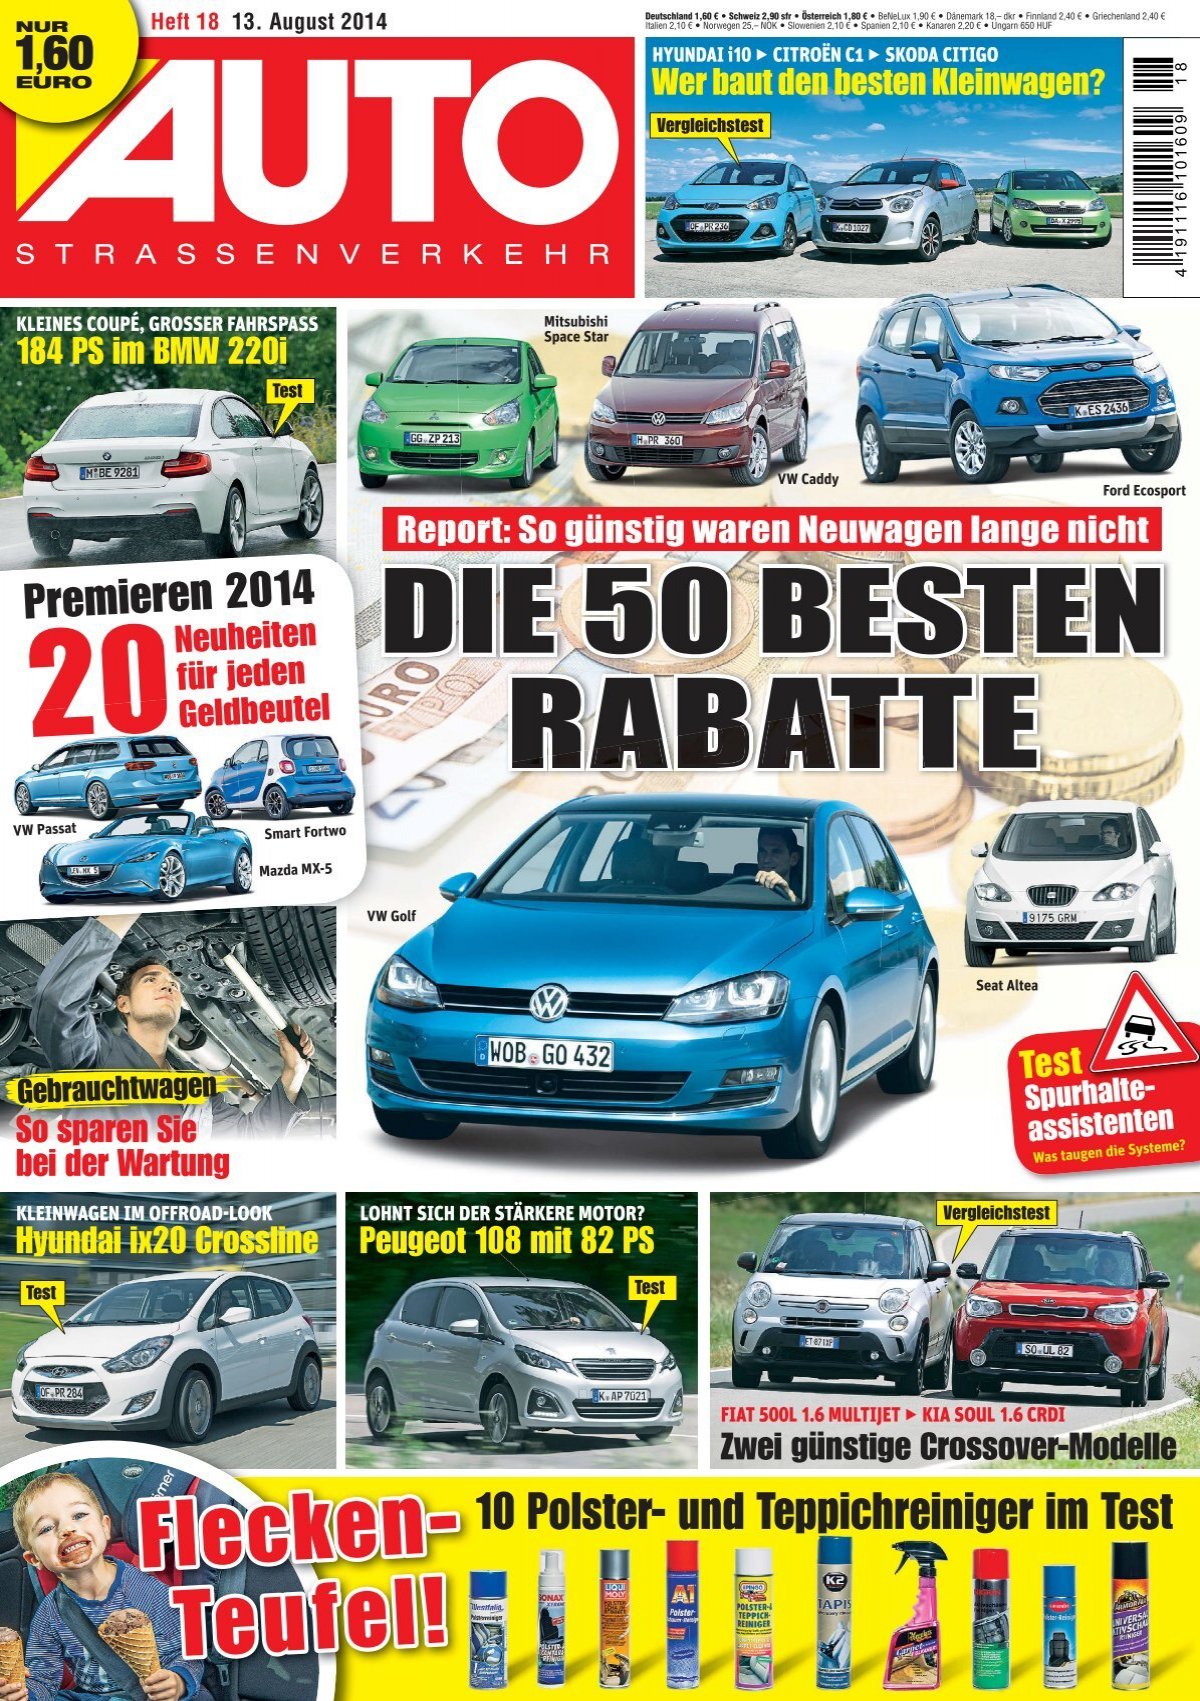 AUTOStraßenverkehr Heft 18-2014